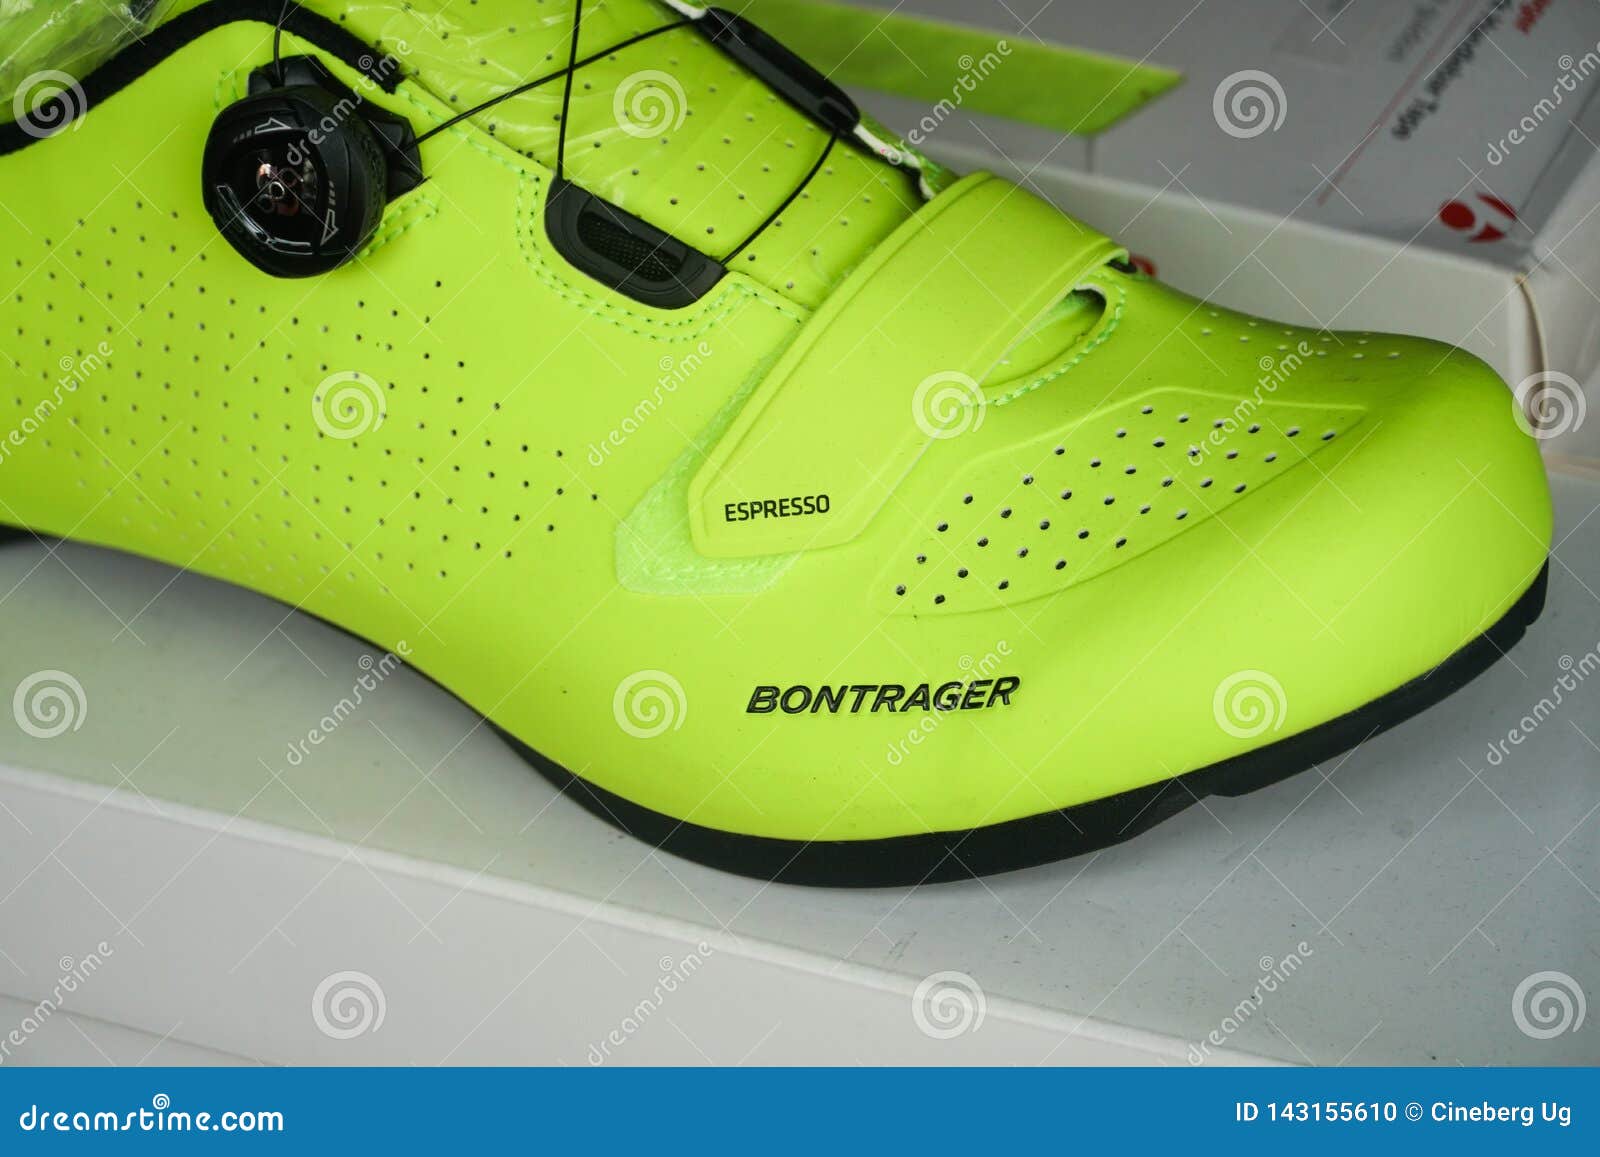 bontrager mtb cycling shoes